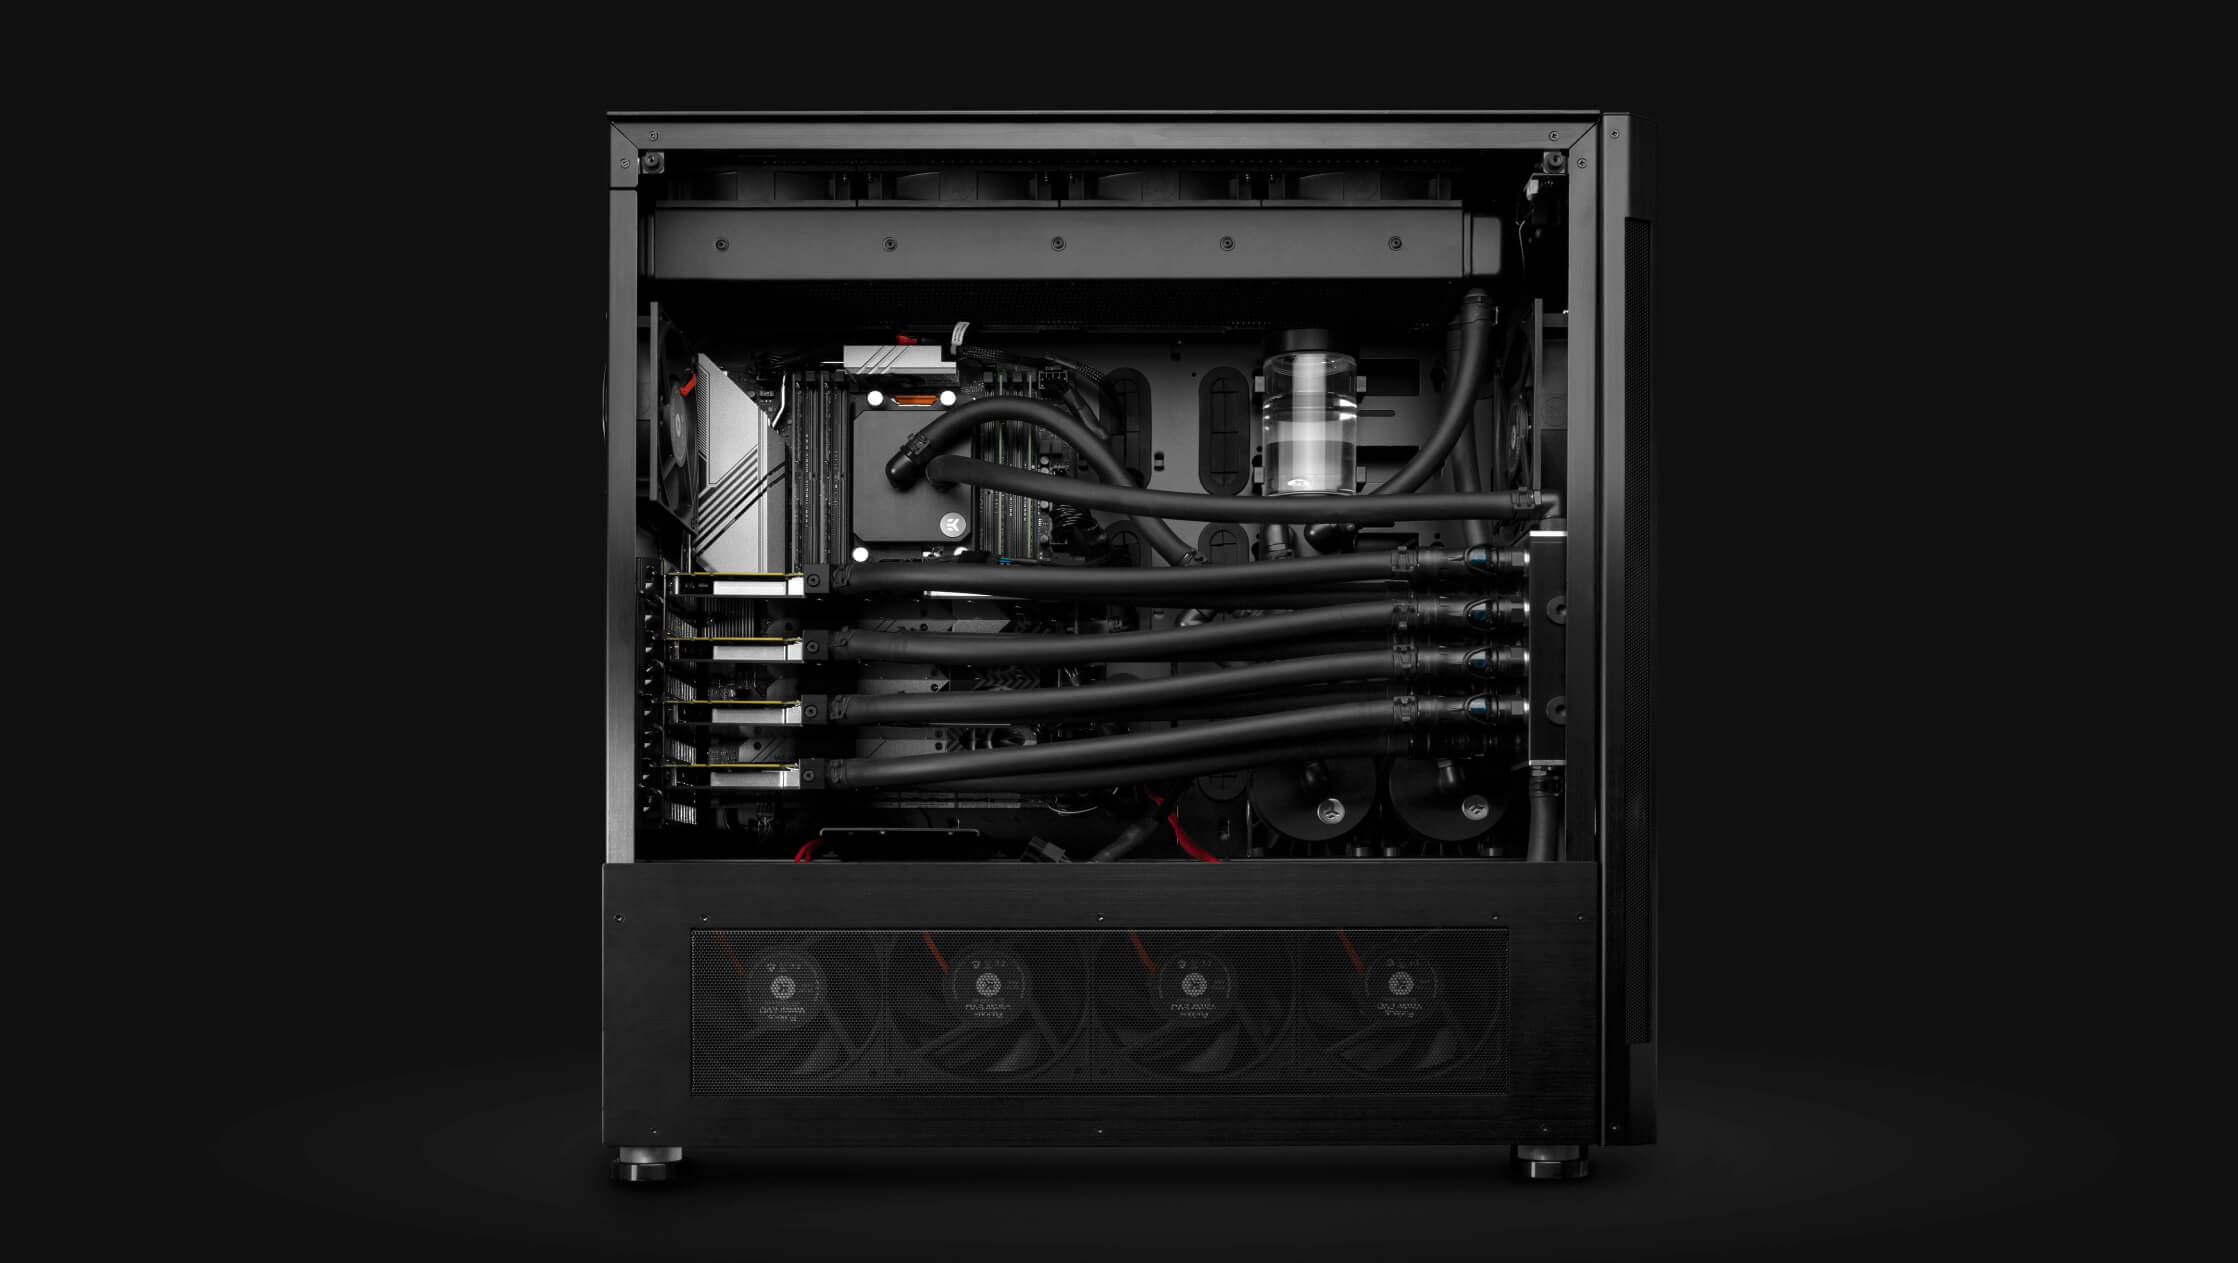 EK Fluid Works Studio Series S5000 with AMD Threadripper CPU, 4 liquid-cooled GPUs, dual D5 pumps silently cooled with dual 480mm radiators.